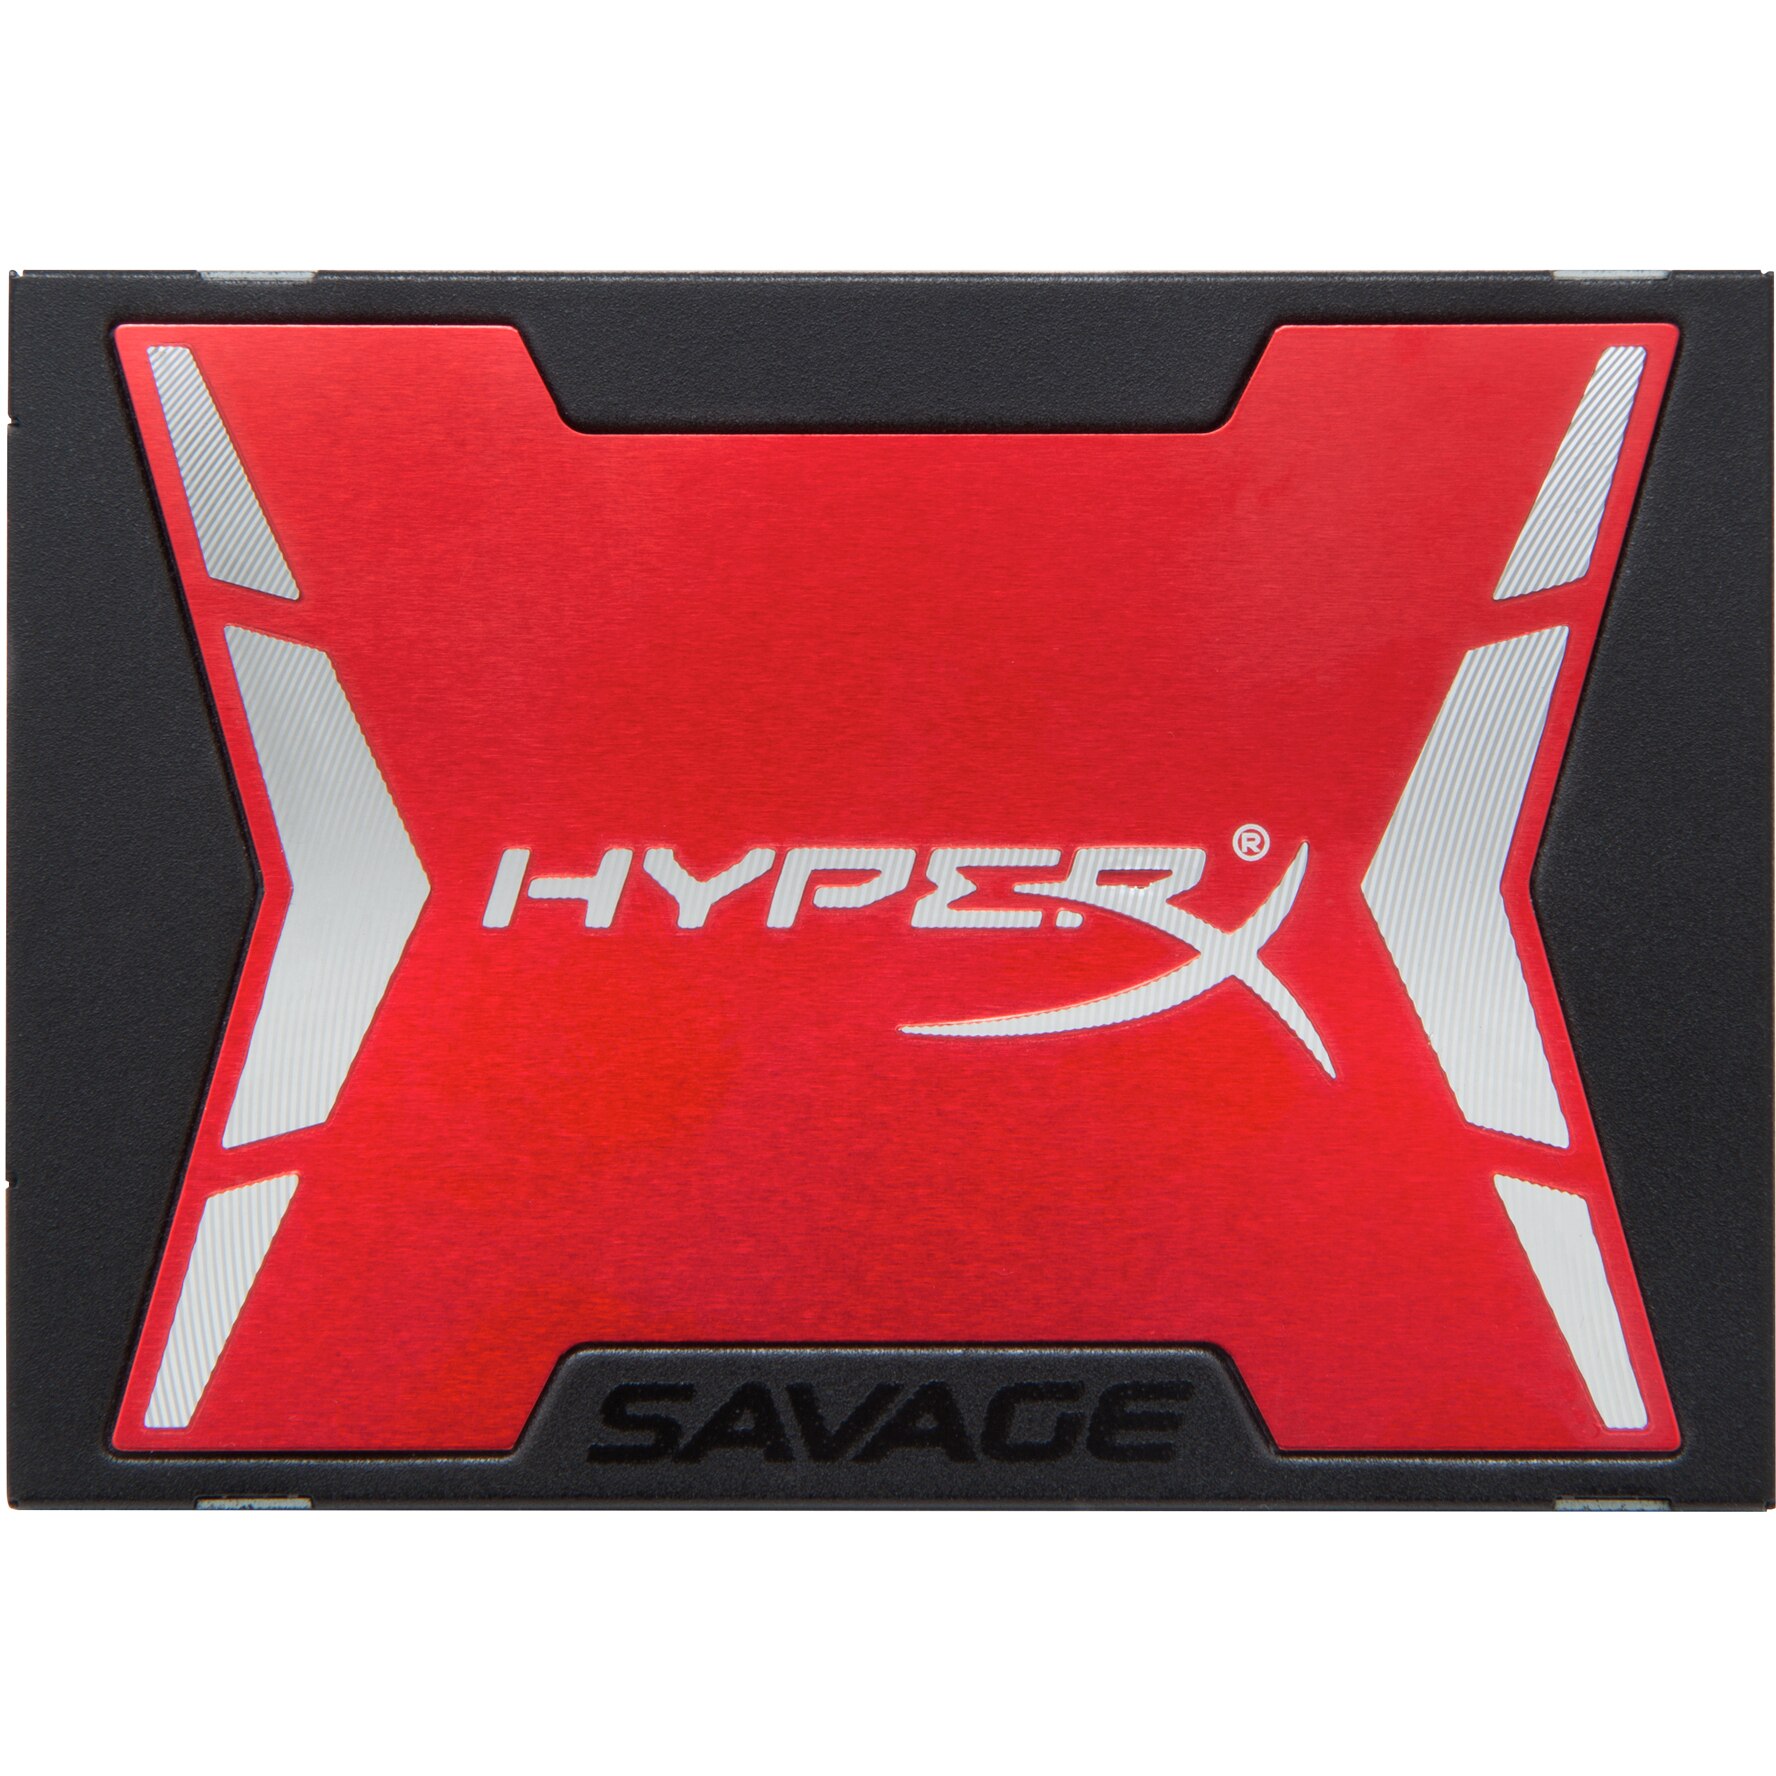 peach skip Refrigerate Solid State Drive (SSD) HyperX Savage, 240GB, 2.5", SATA III - eMAG.ro